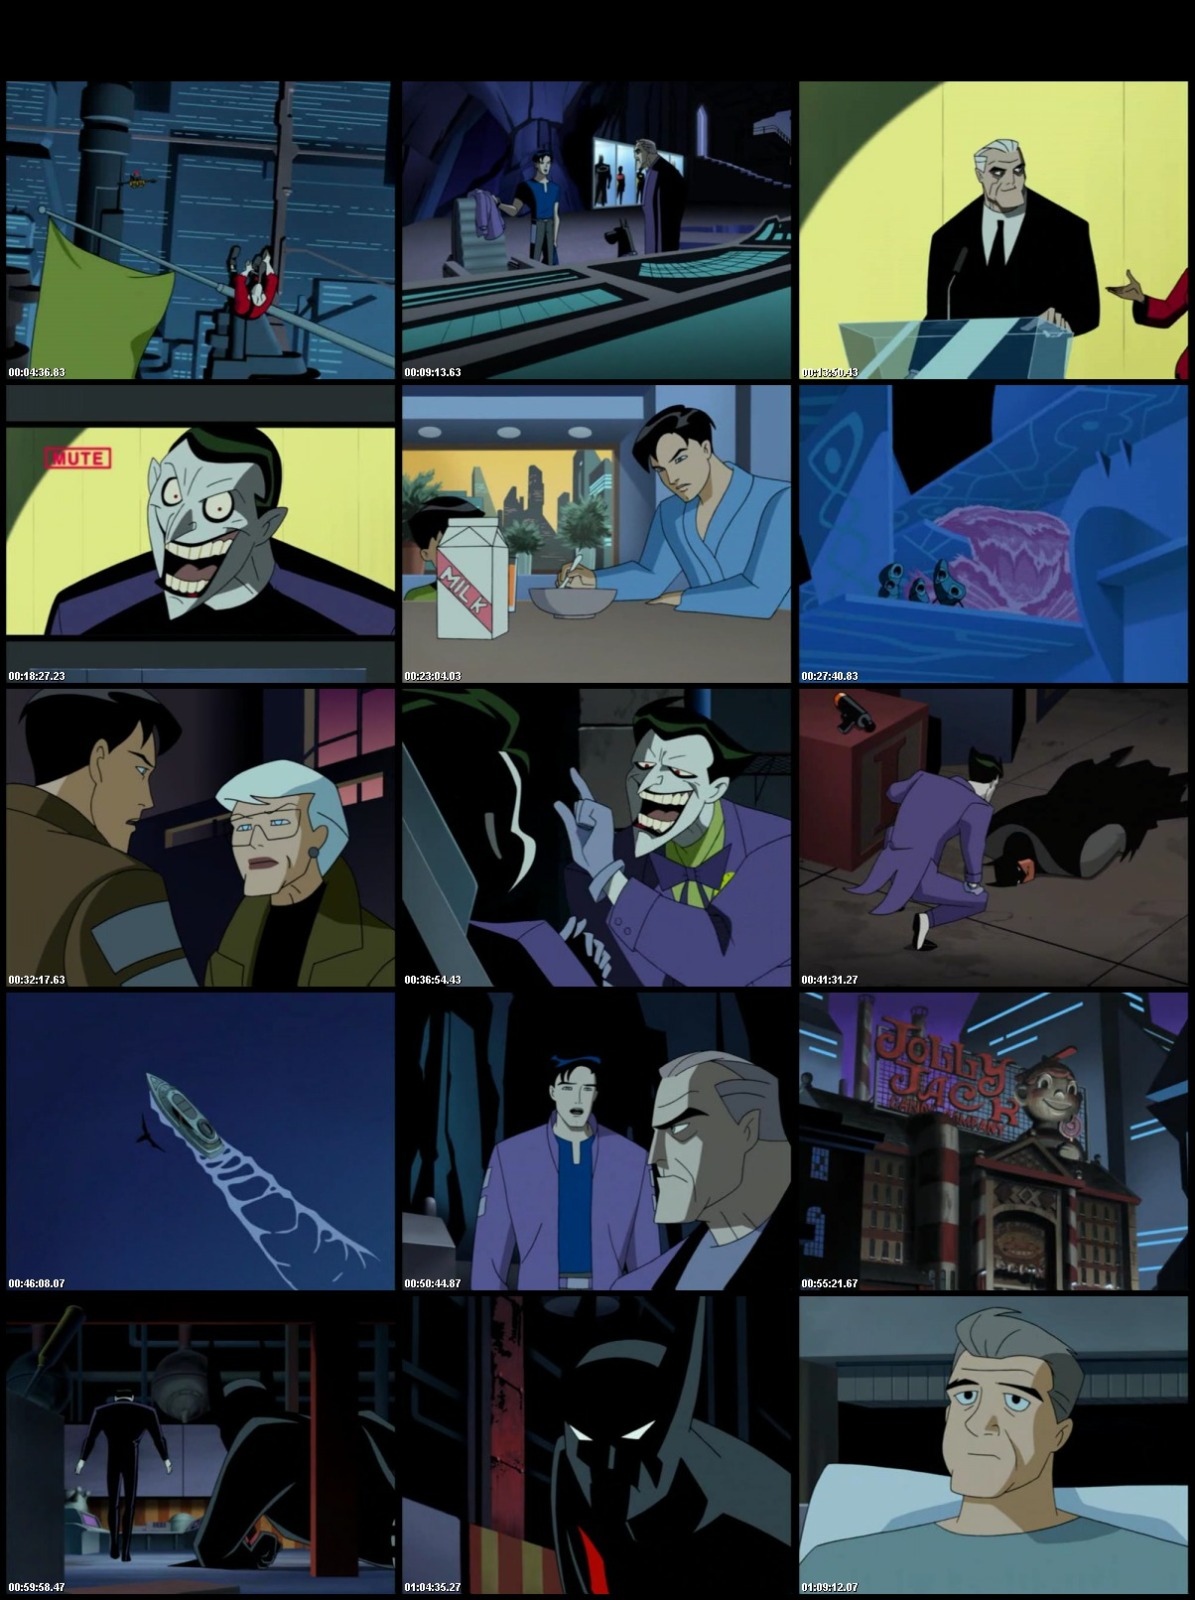 ohoi28 - Batman del futuro: El retorno del Guasón[Sin censura][MKV][Mega] - Descargas en general